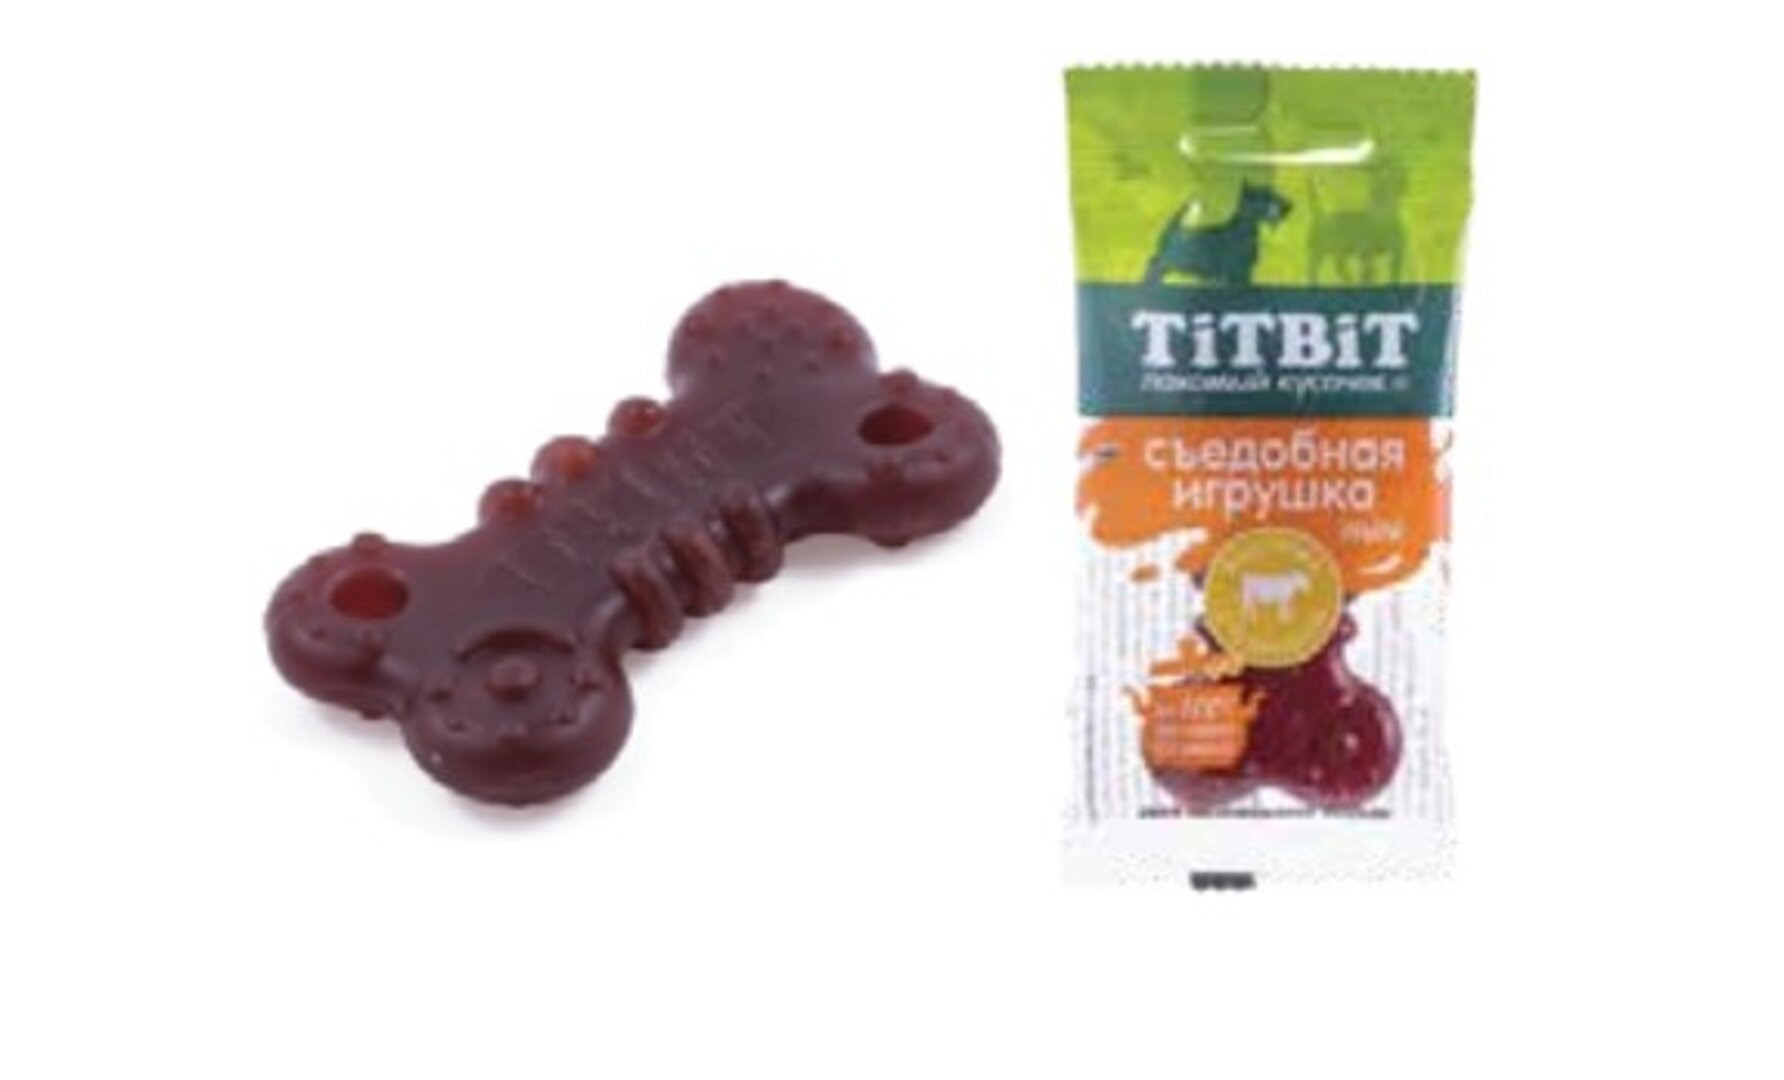 TiTBiT ტიტბიტი - საკვები სათამაშო ხბოს ხორცით